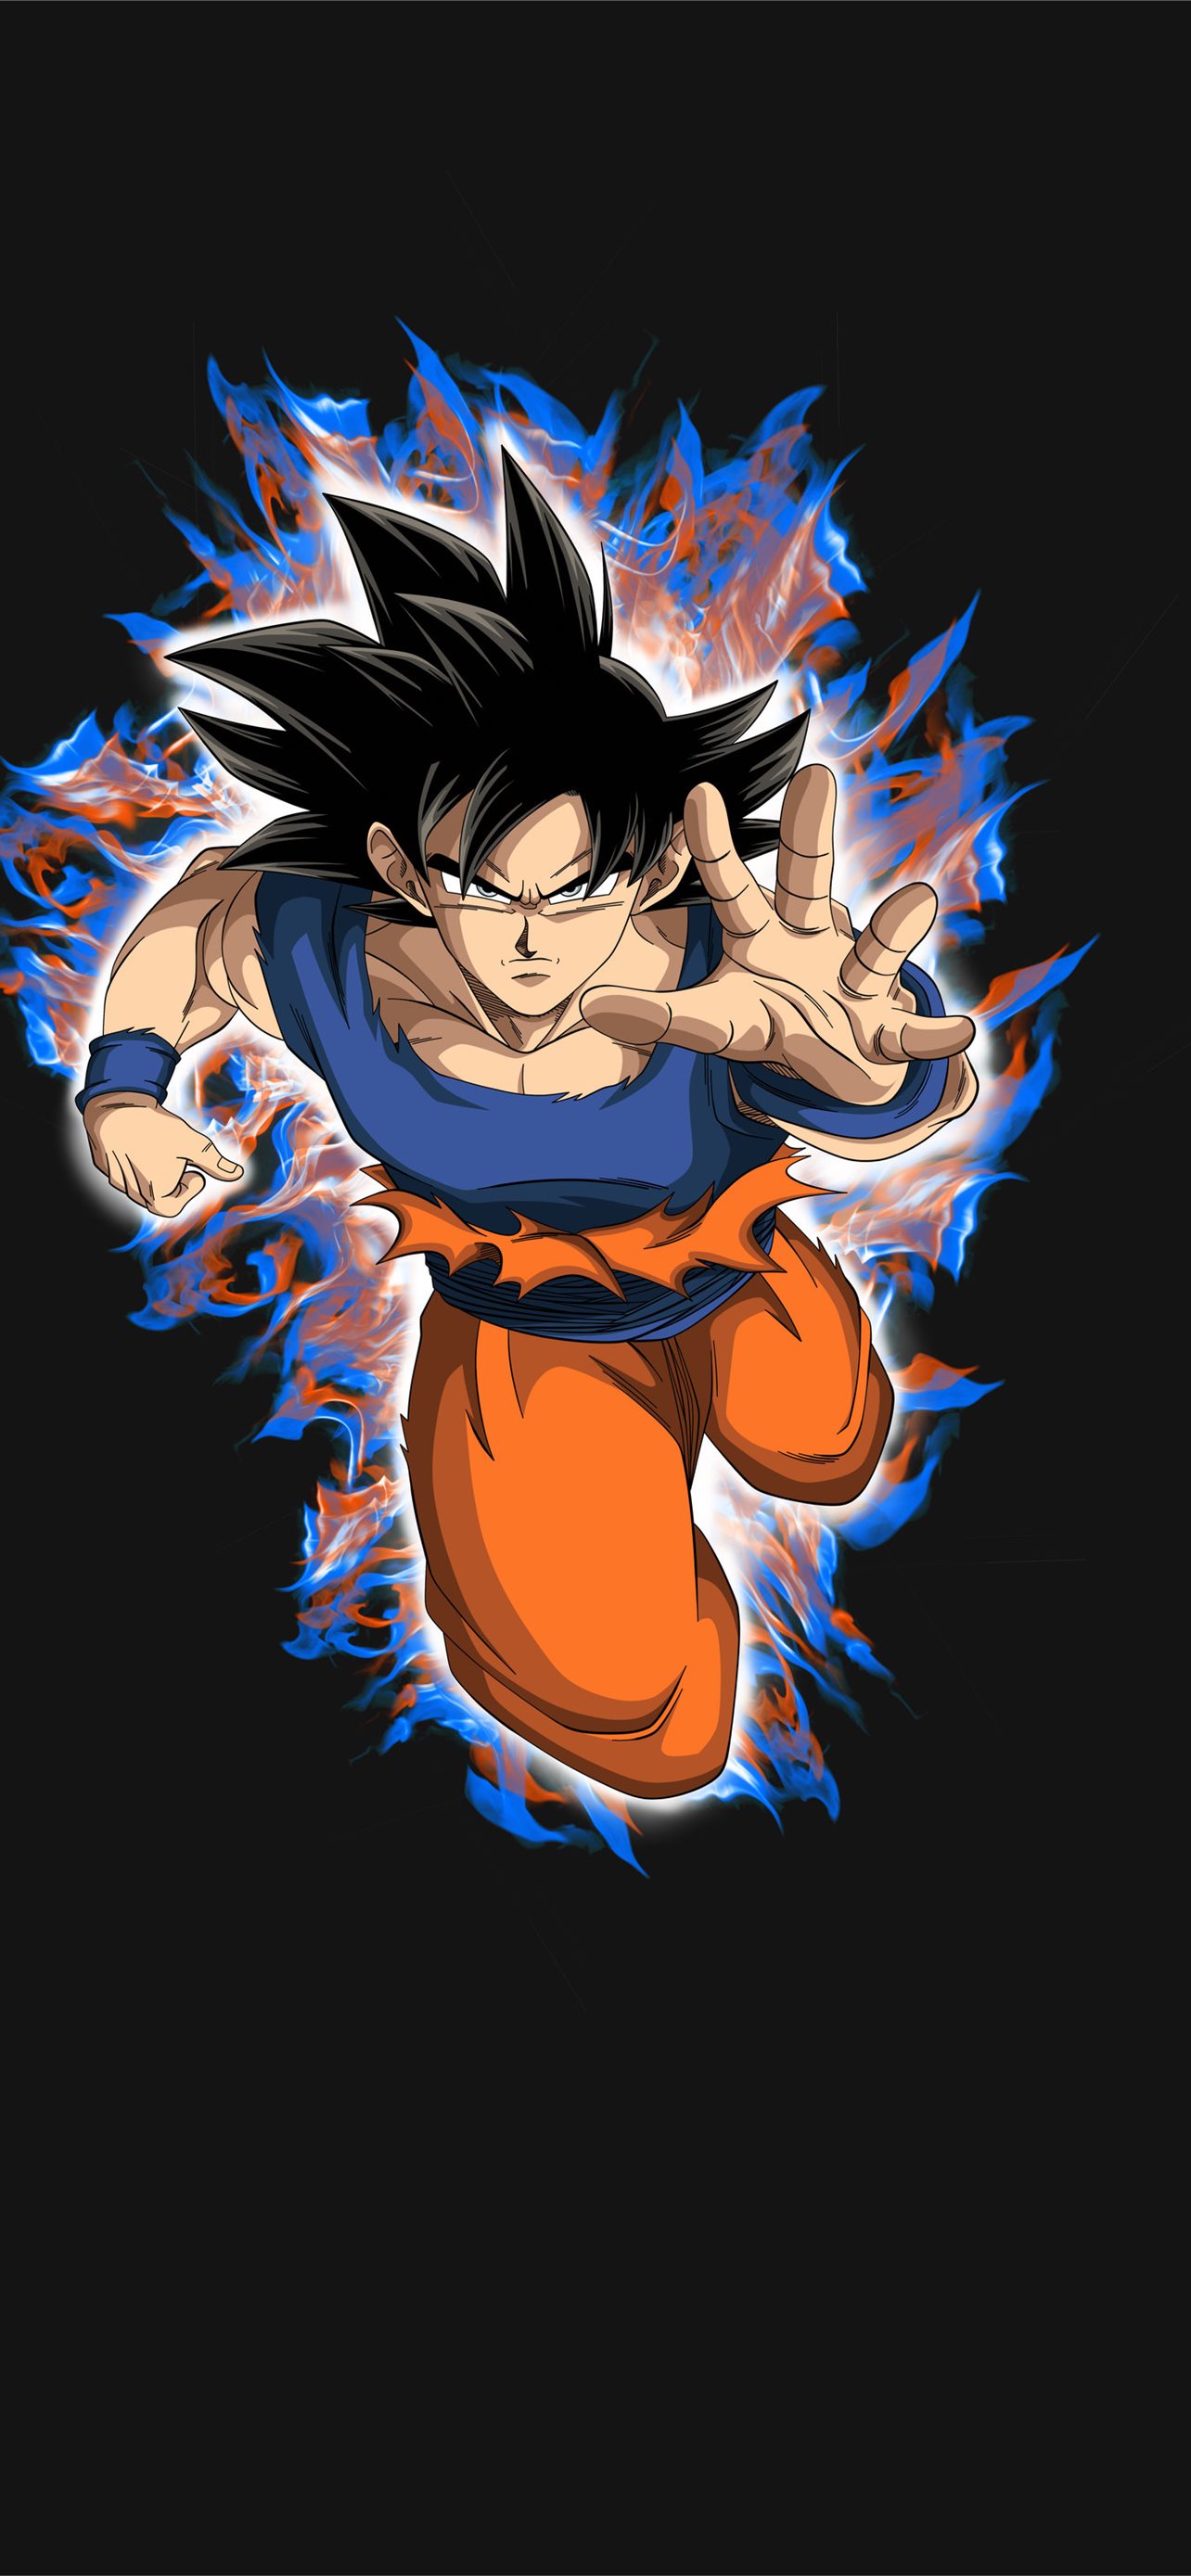 90 Goku Ultra Instinct Mastered on afari iPhone Wallpapers Free Download